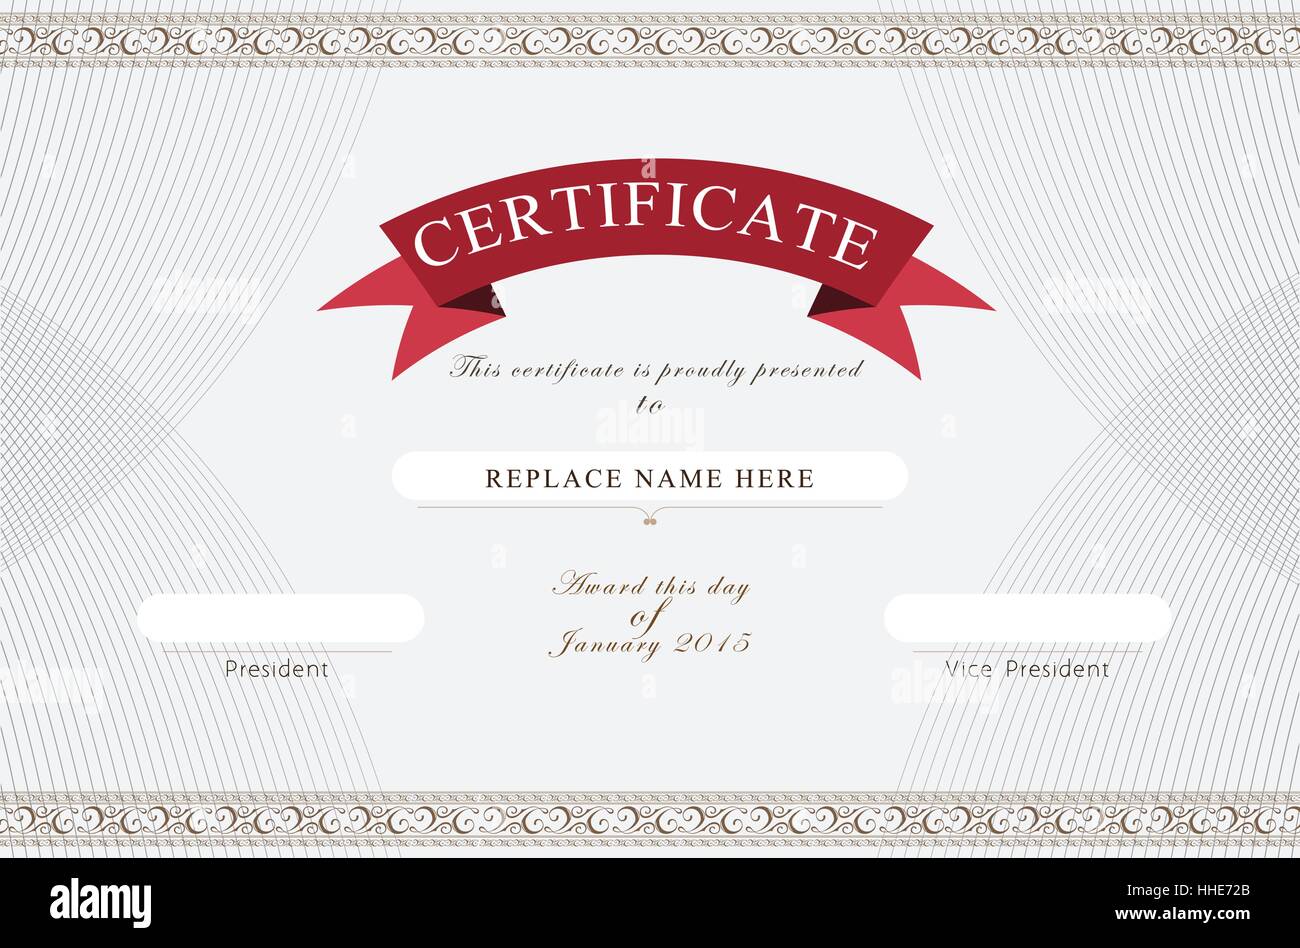 Vector Ornate Certificate Template Stockfotos und -bilder Kaufen With Regard To High Resolution Certificate Template